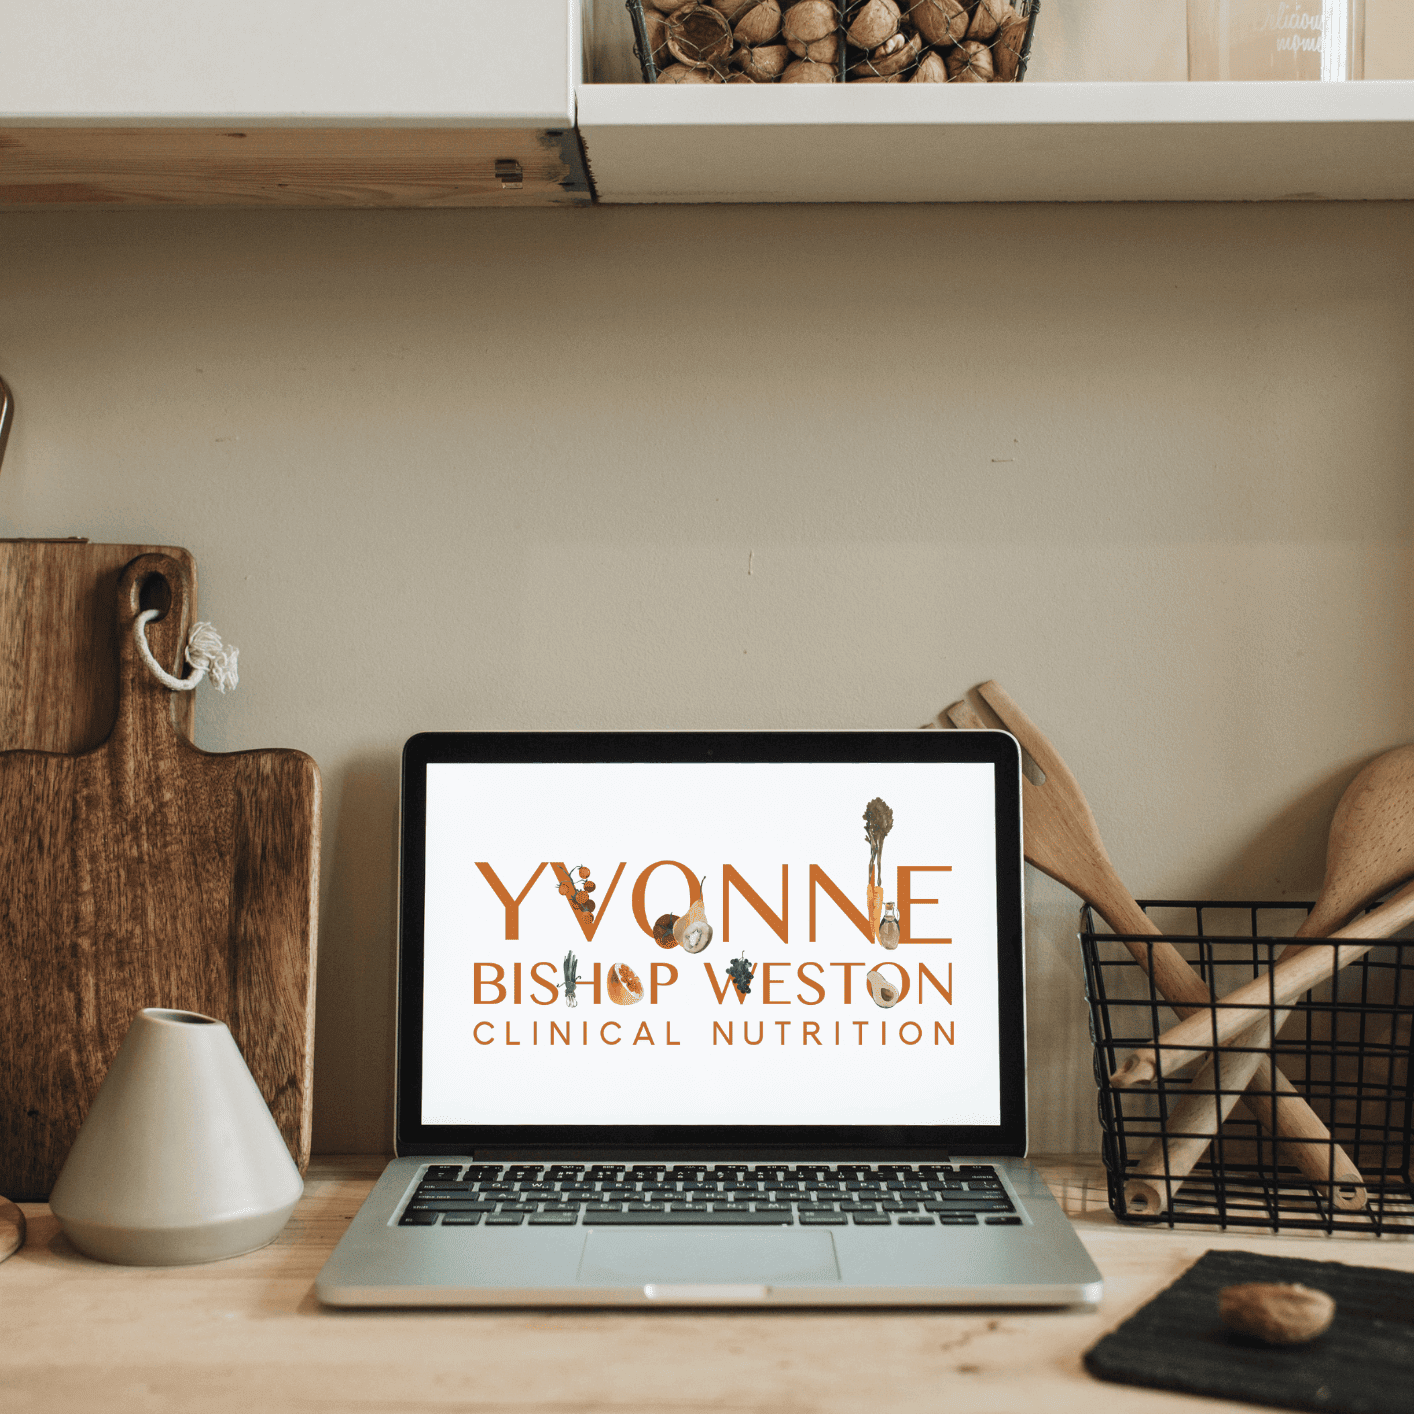 Yvonne bishop weston nutrition logo on a laptop